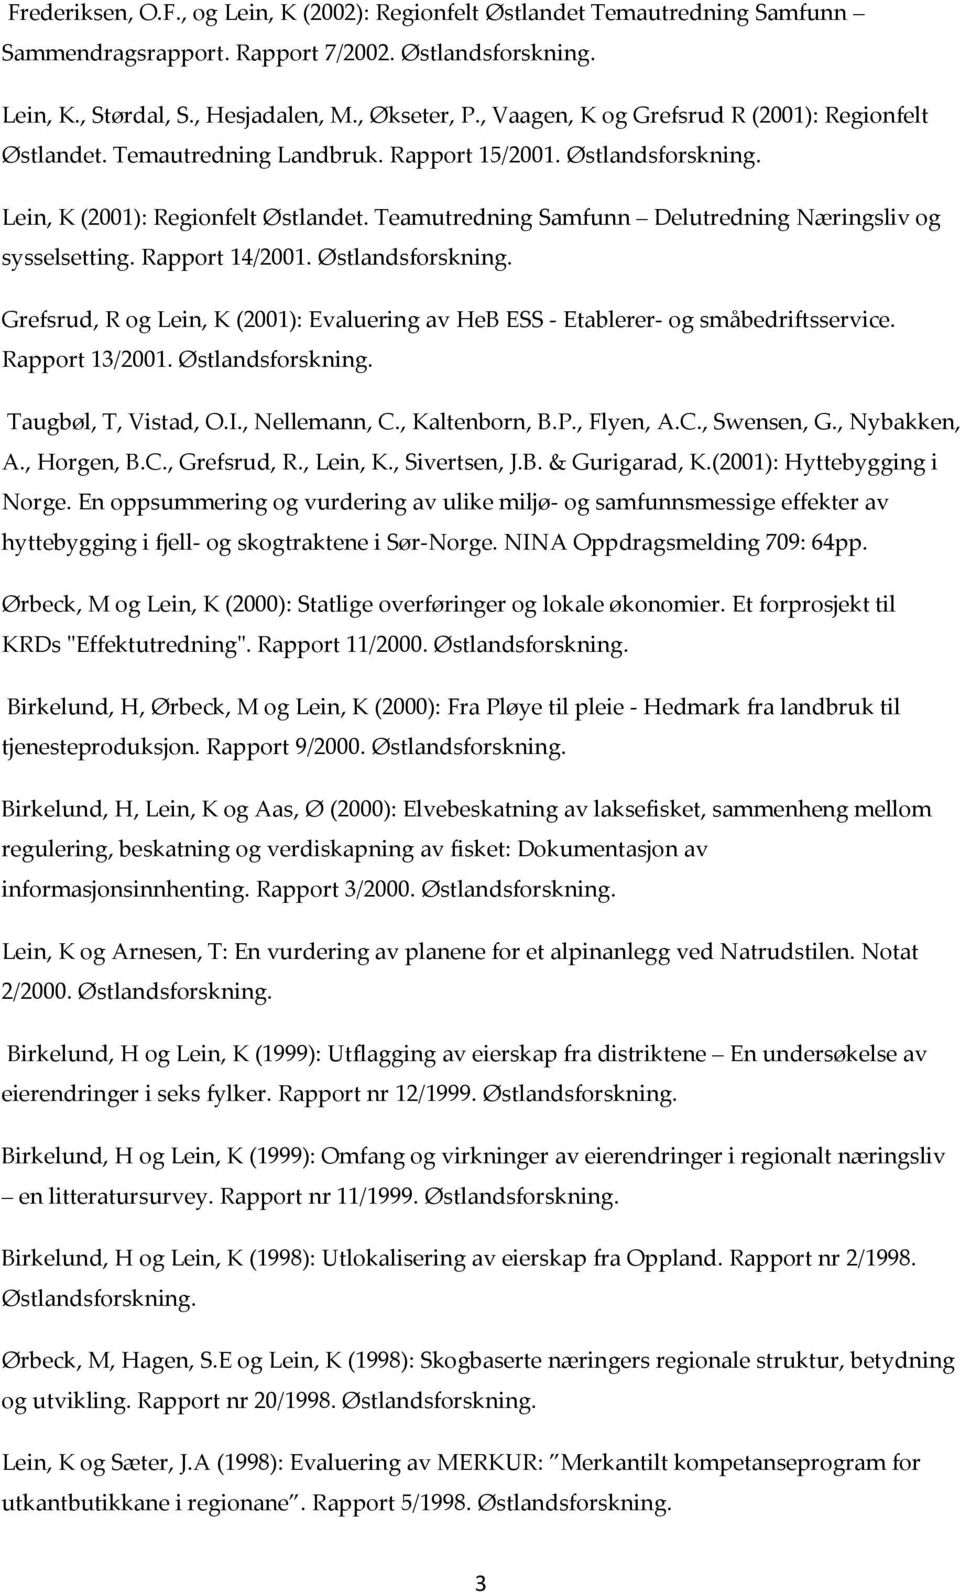 Rapport 14/2001. Grefsrud, R og Lein, K (2001): Evaluering av HeB ESS - Etablerer- og småbedriftsservice. Rapport 13/2001. Taugbøl, T, Vistad, O.I., Nellemann, C., Kaltenborn, B.P., Flyen, A.C., Swensen, G.